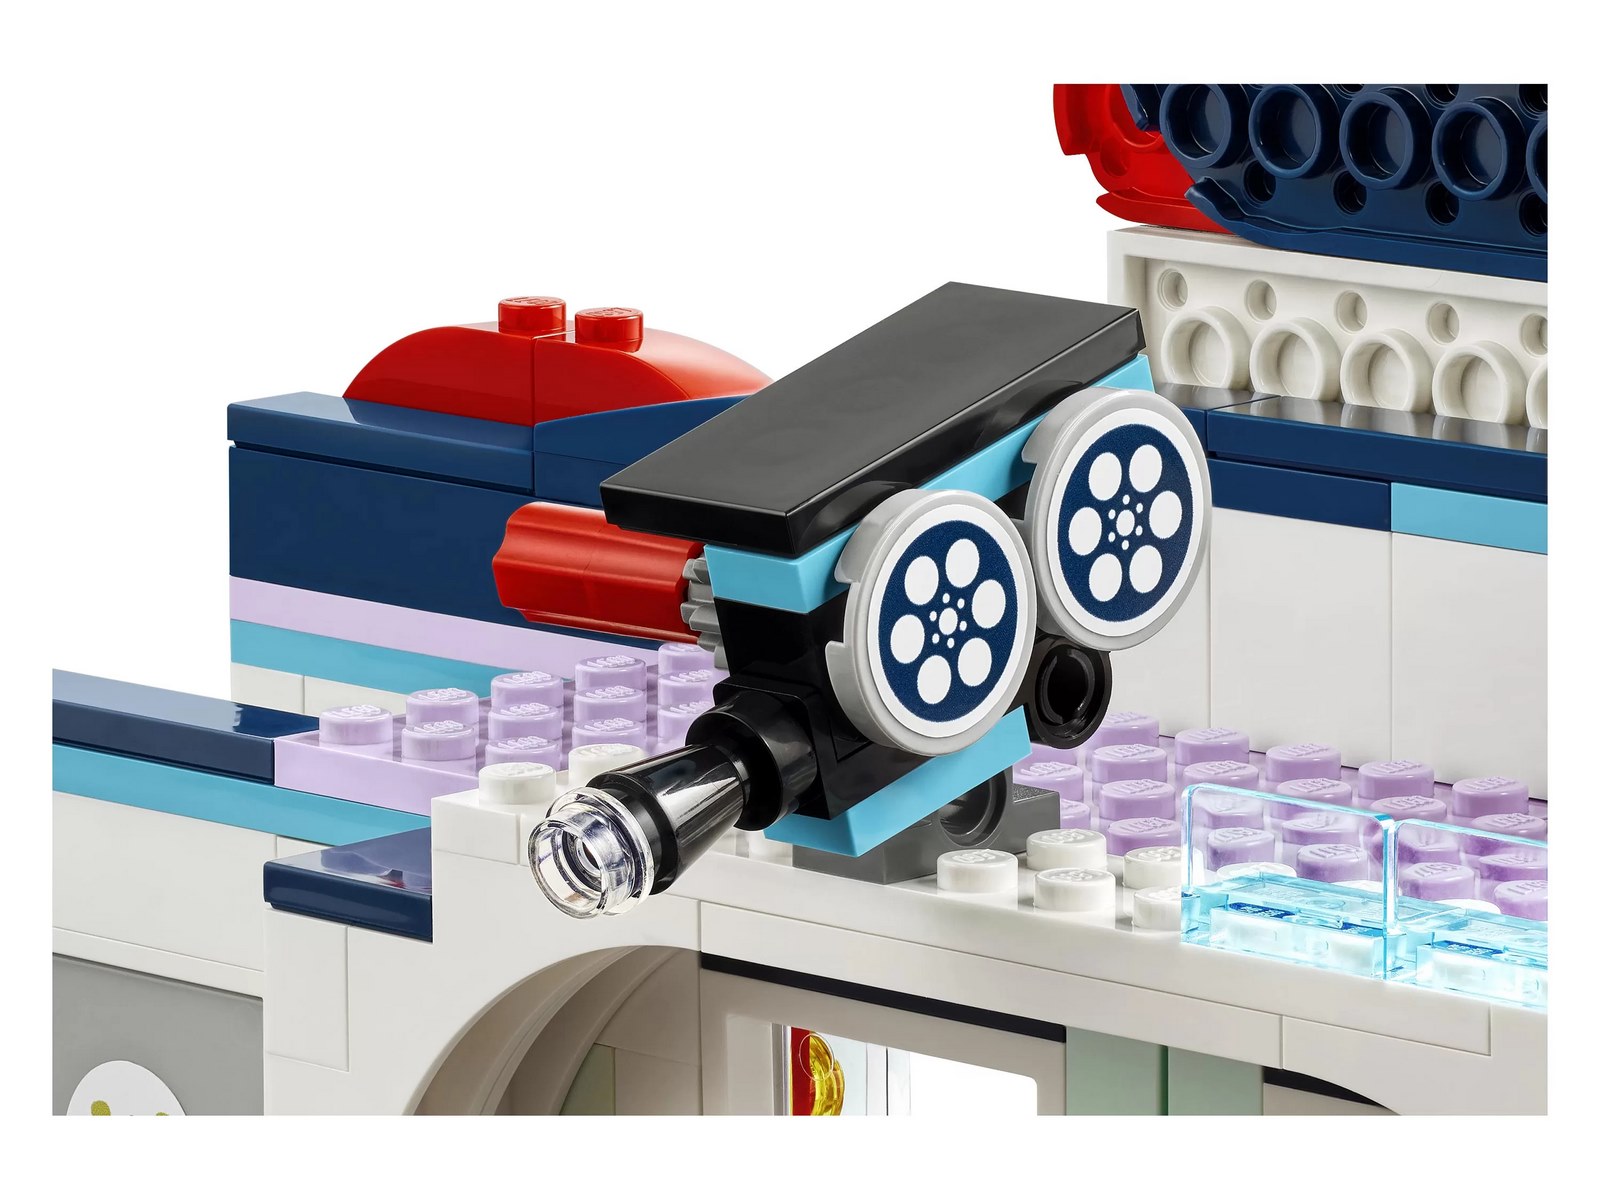 Конструктор LEGO Friends  «Кинотеатр Хартлейк-Сити» 41448 / 451 деталь